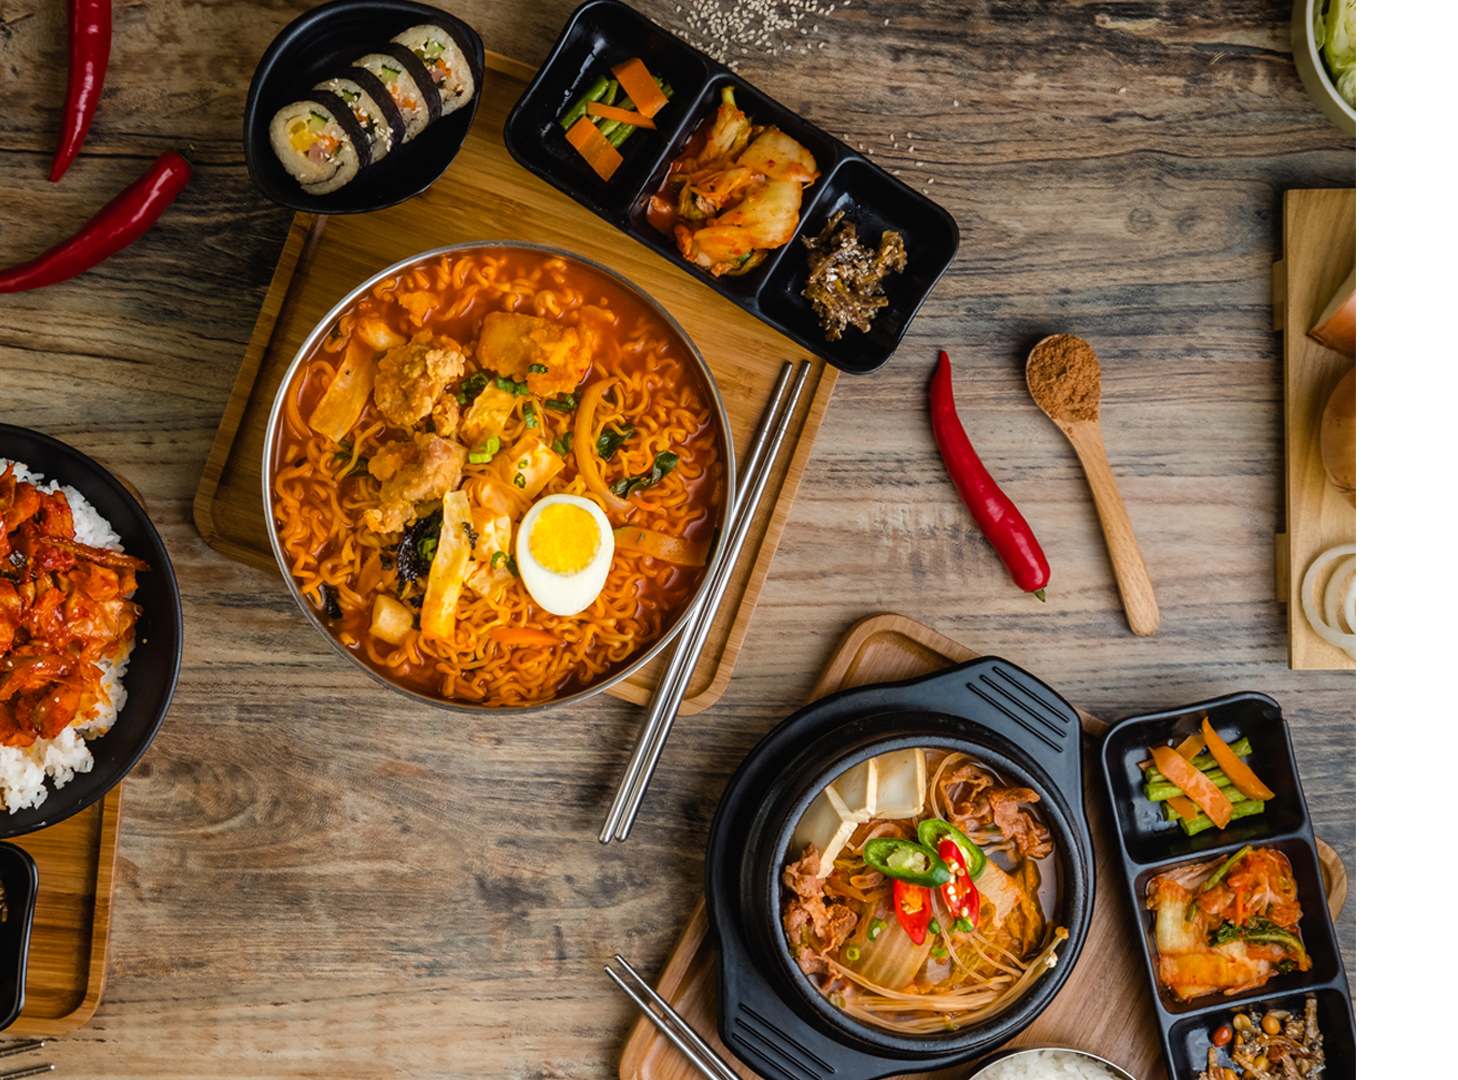 MyeongDong Topokki – 명동떡볶이 #1 Fast Casual Korean Restaurant Chain